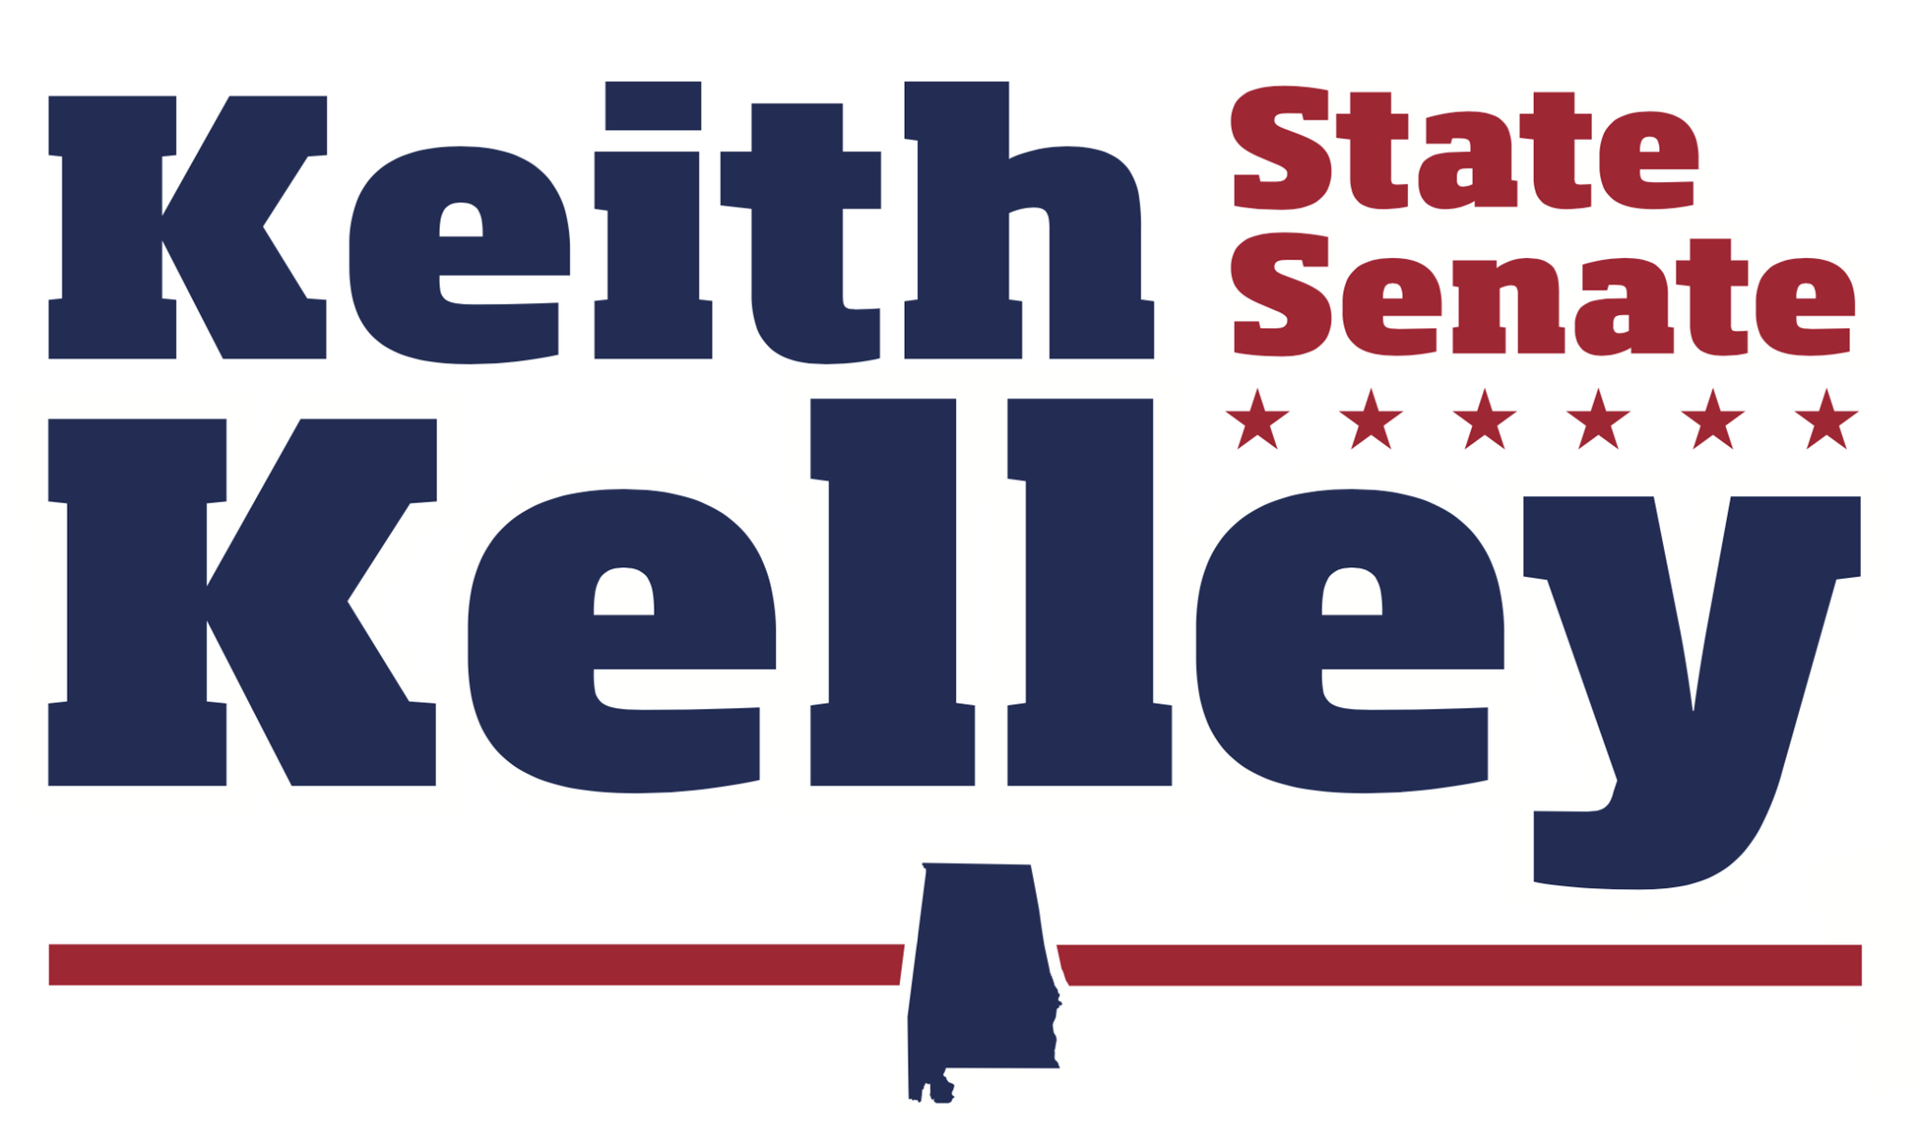 Kelly logo